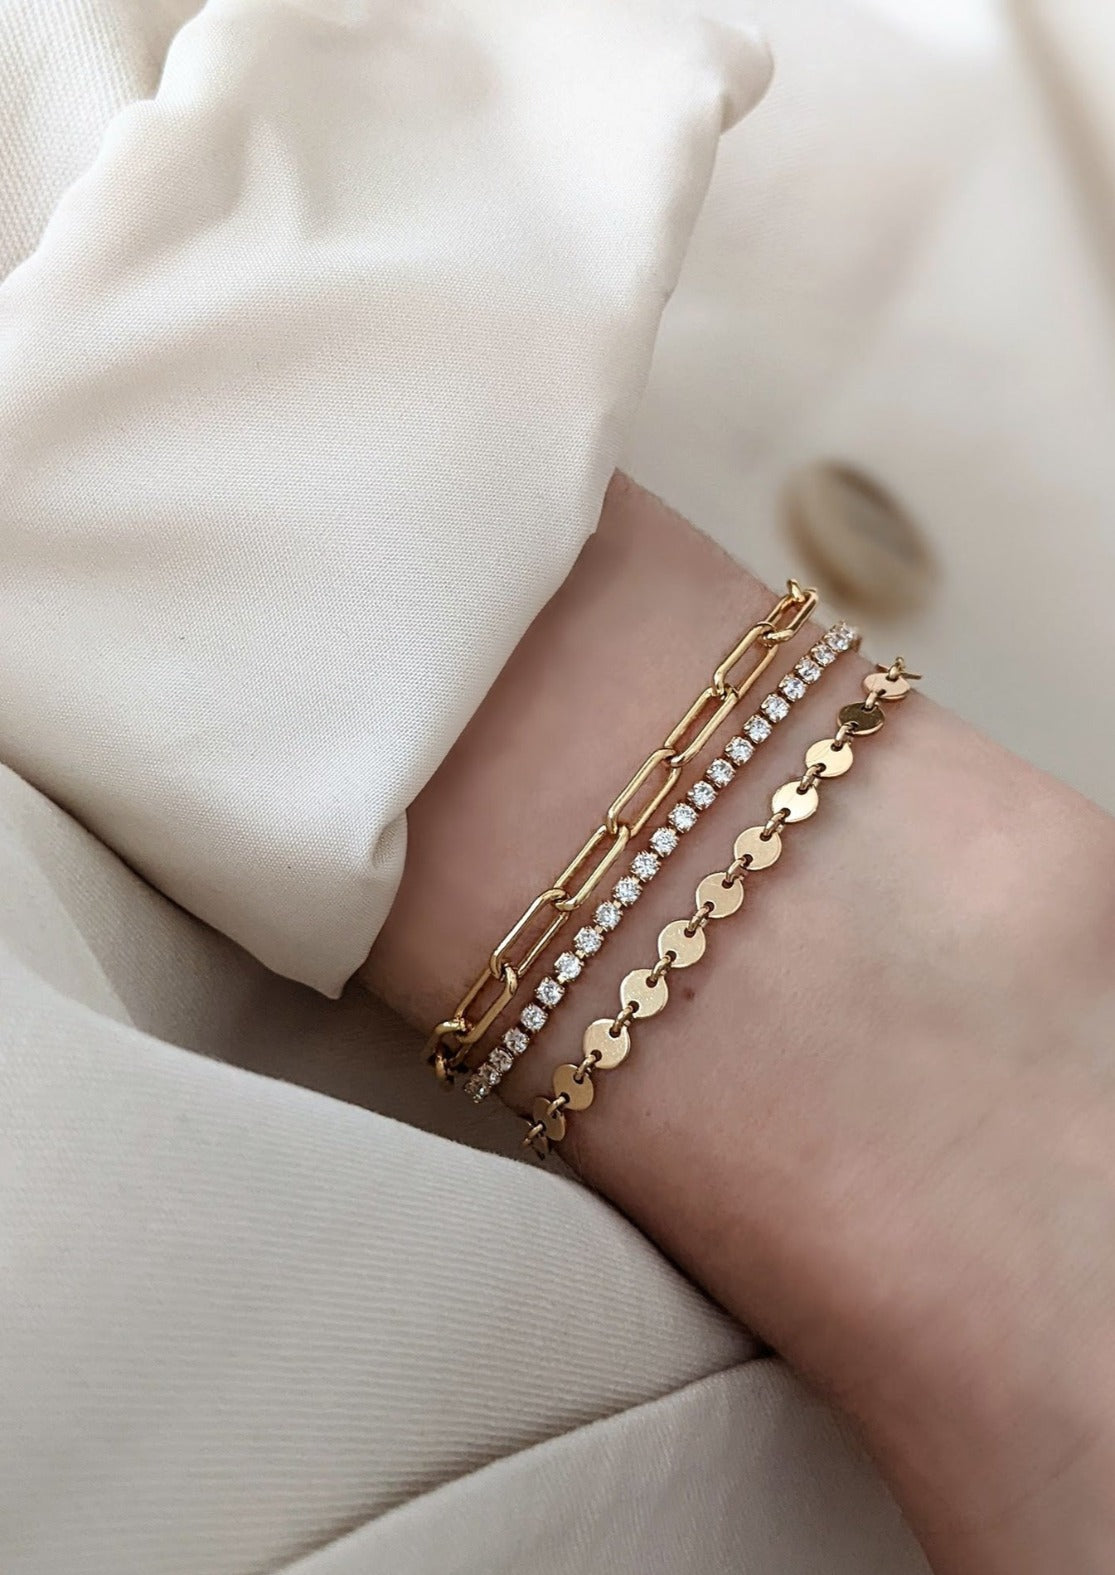 Buy Dainty Gold Bracelet, Layered Bracelet, Gold Chain Bracelet for Women,  Stackable Bracelet, Simple Gold Jewelry, Double Bracelet, Annikabella  Online in India - Etsy